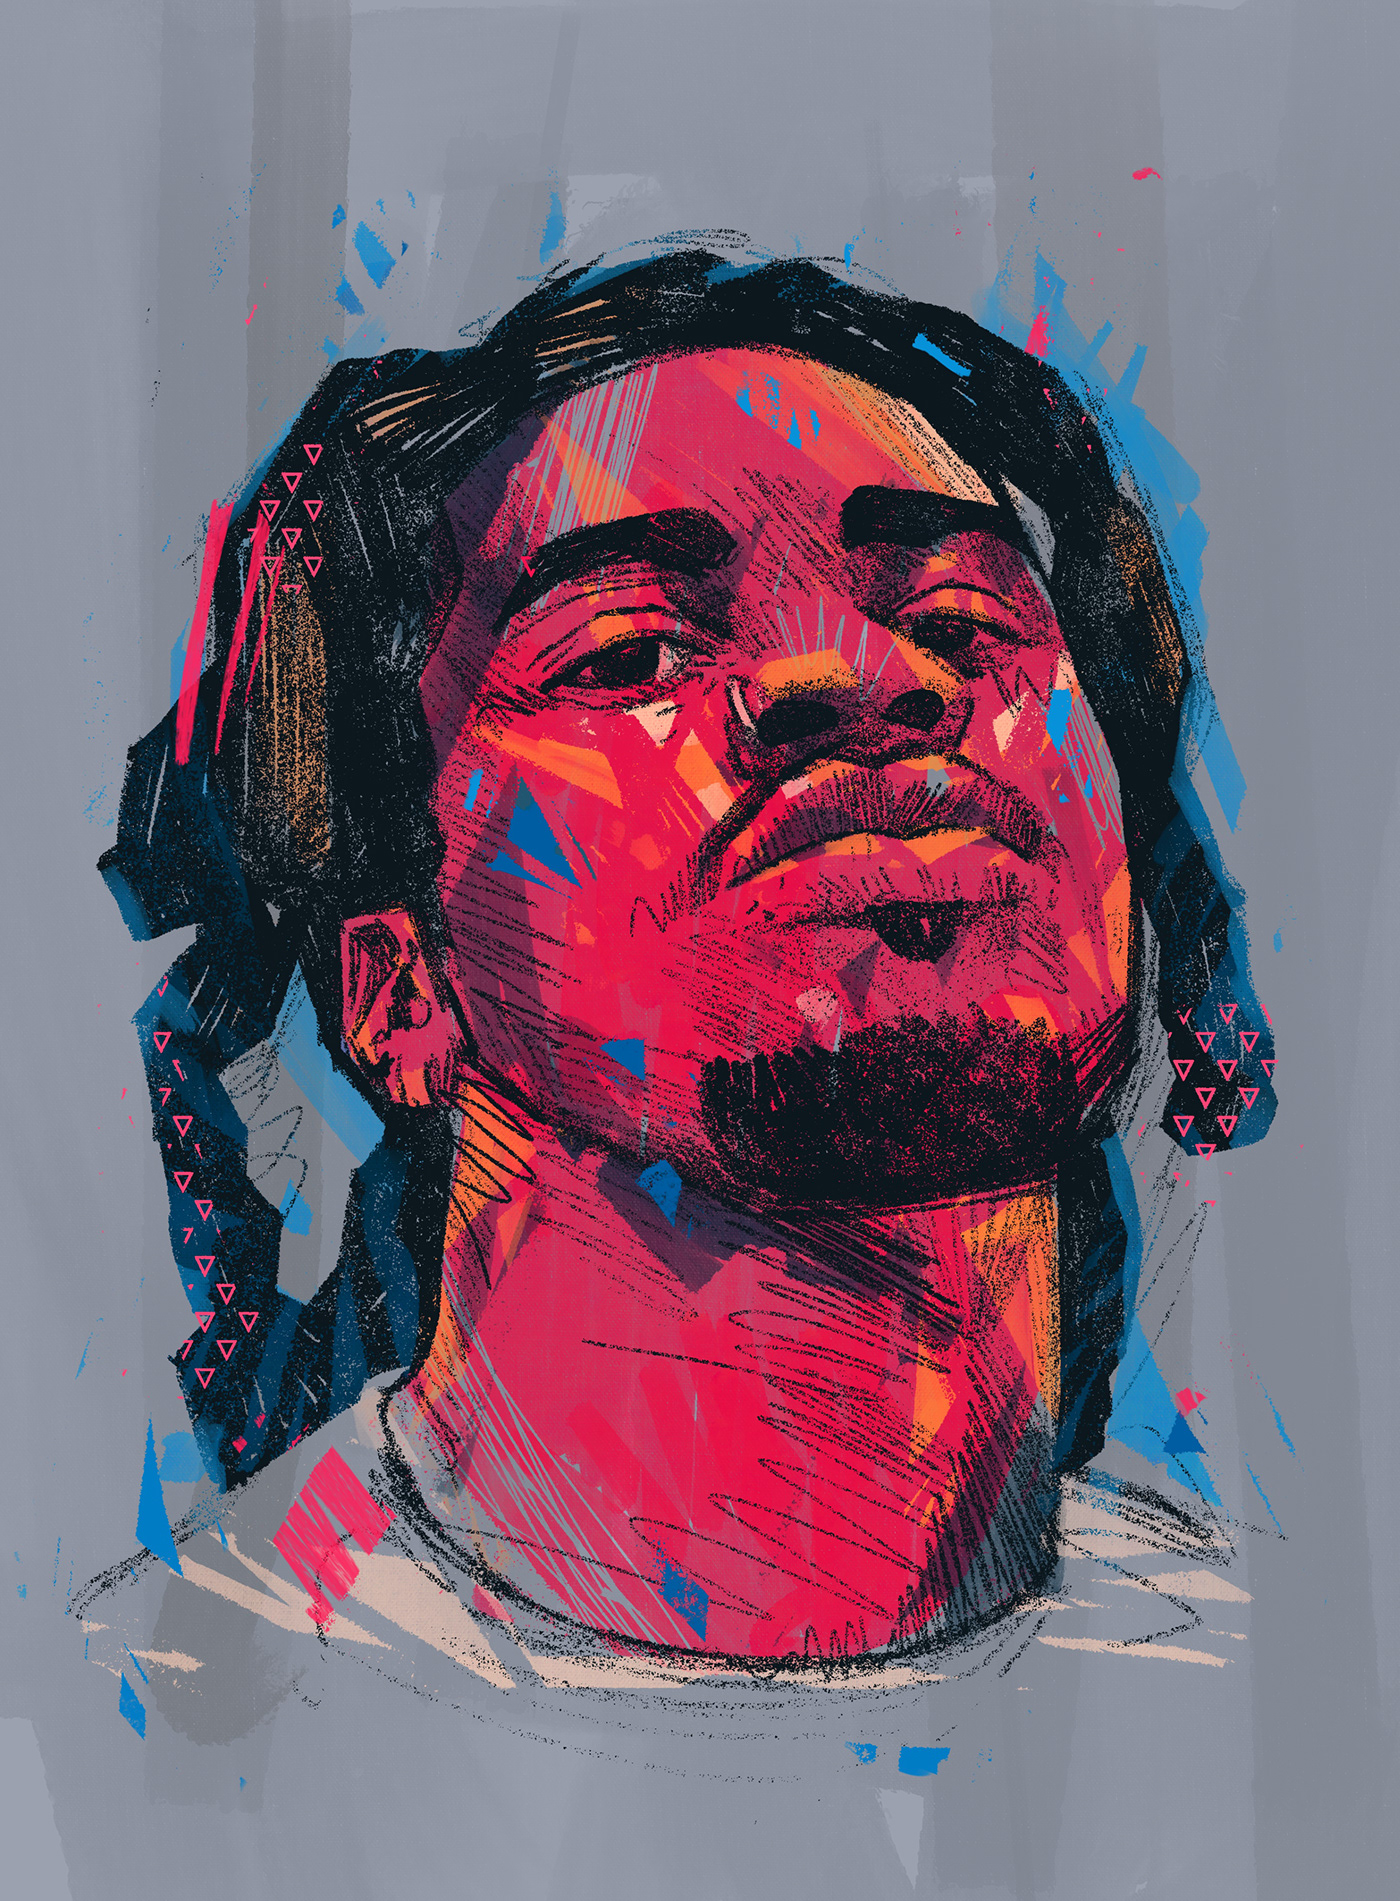 Digital Art  digital illustration illustrated portraits illustrated rappers ILLUSTRATION  Illustrator portrait illustration portrait illustrator procreate illustrations Rappers